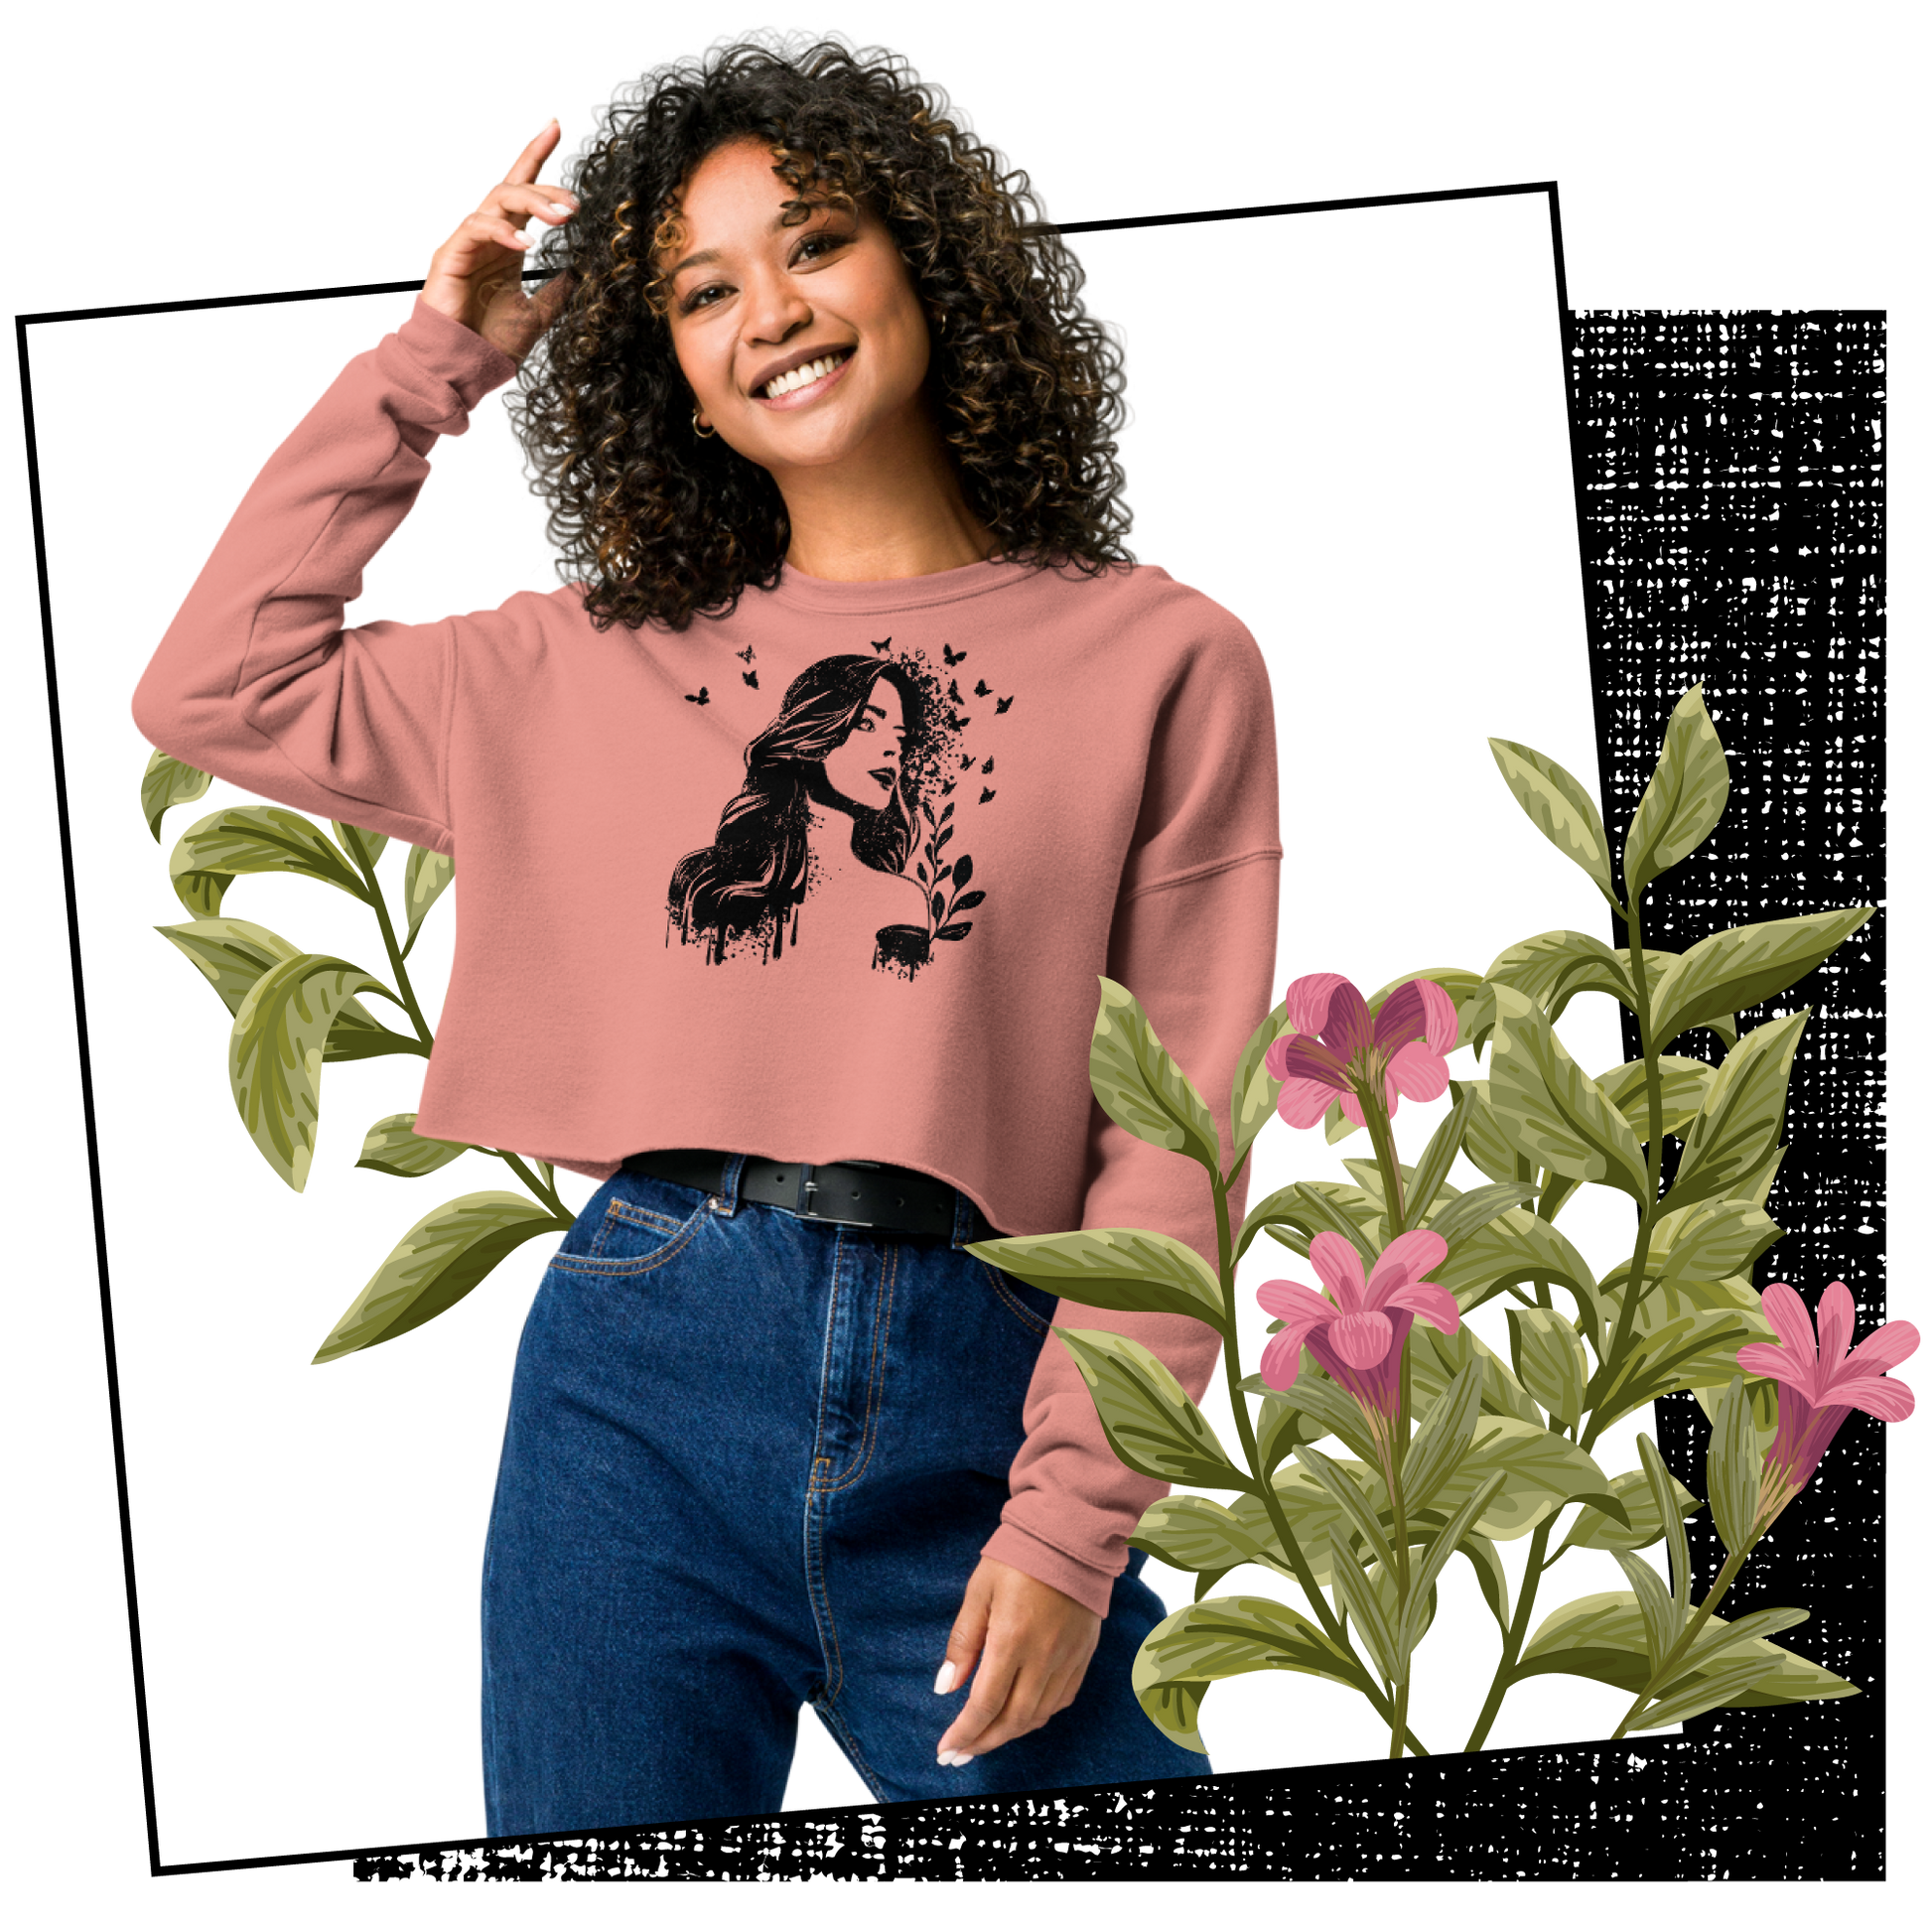 Retro Cropped Sweatshirt - Dreamy Girl in Monochrome Style Lifestyle 02